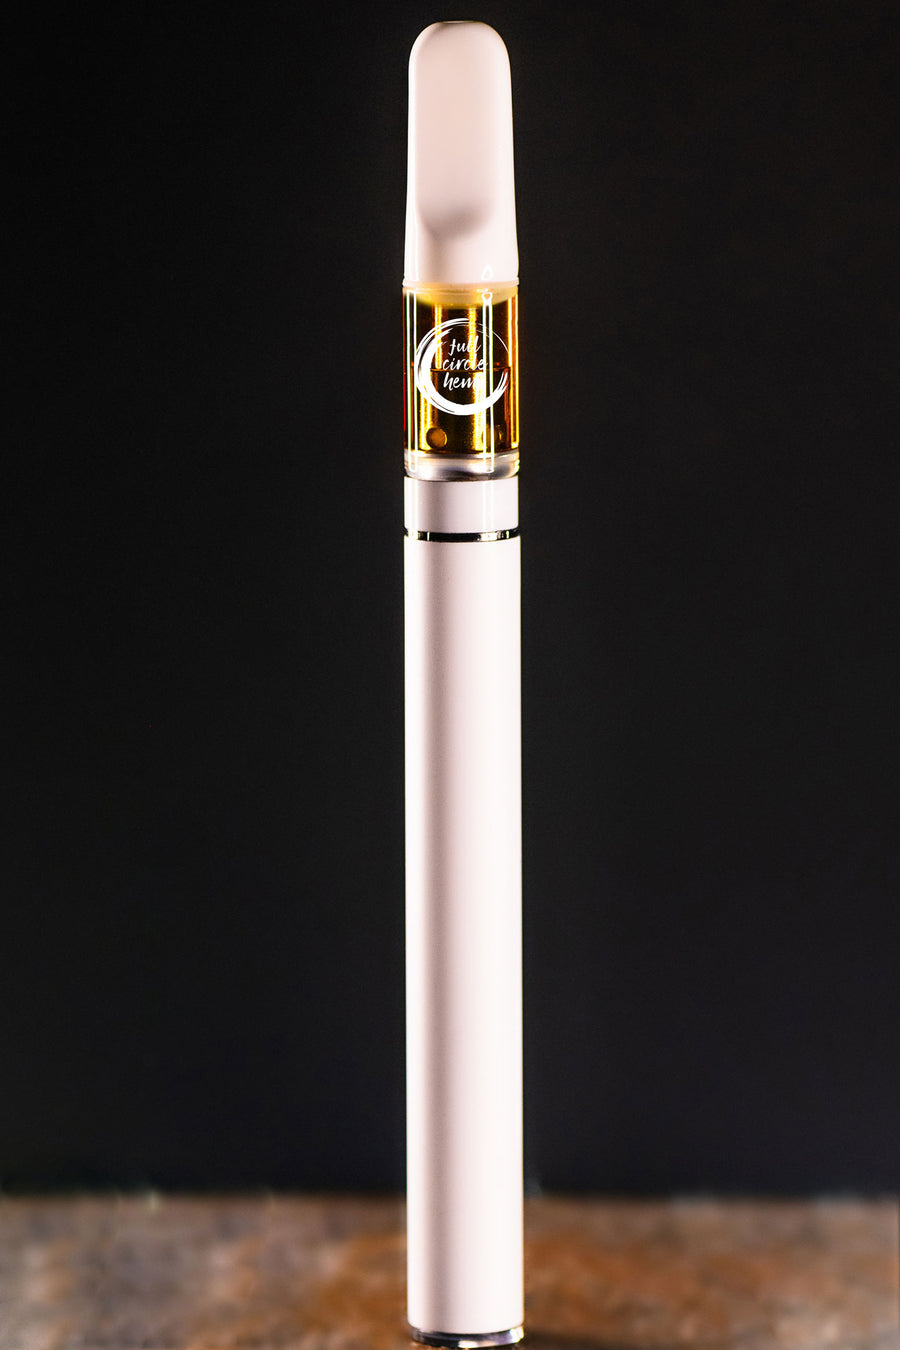 Gelato CBD Vape Pen Kit from Full Circle Hemp